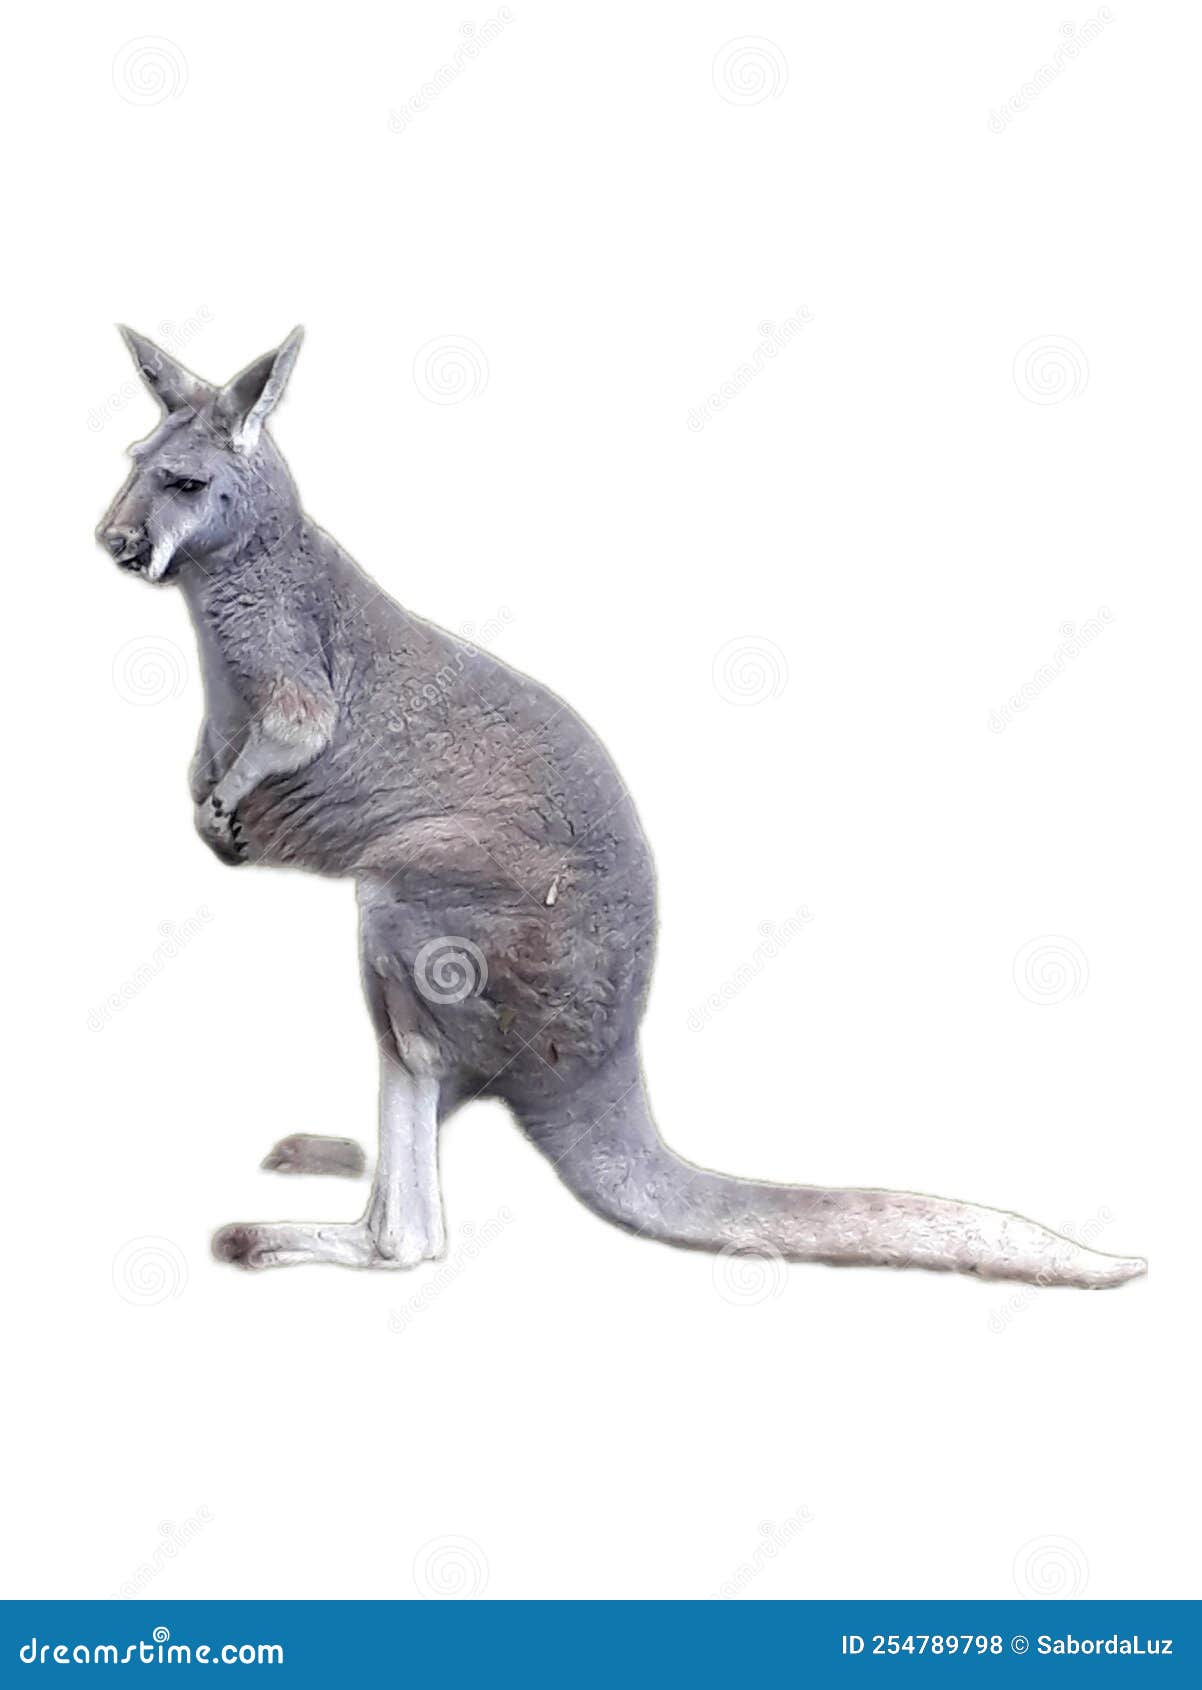 kangoroo in a white background. canguru isolado em fundo escuro.